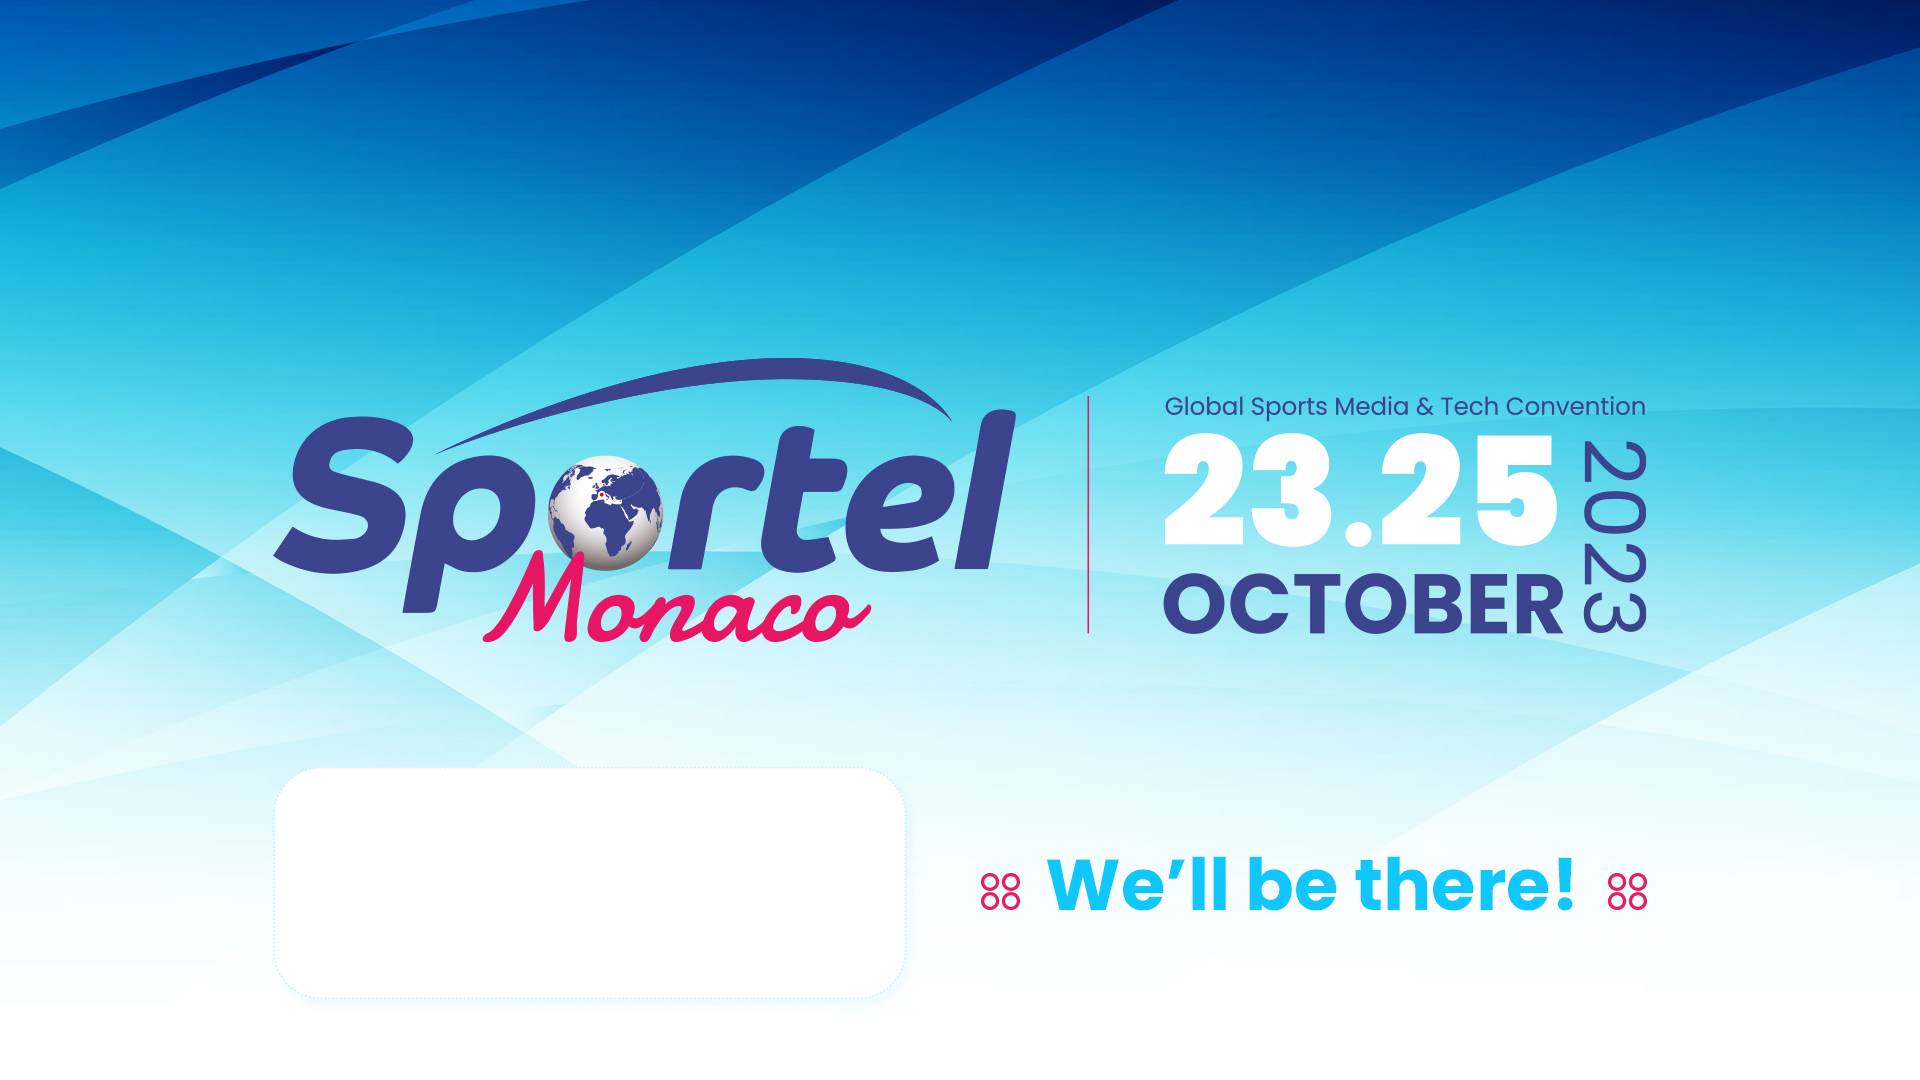 SPORTEL Monaco - We'll be there